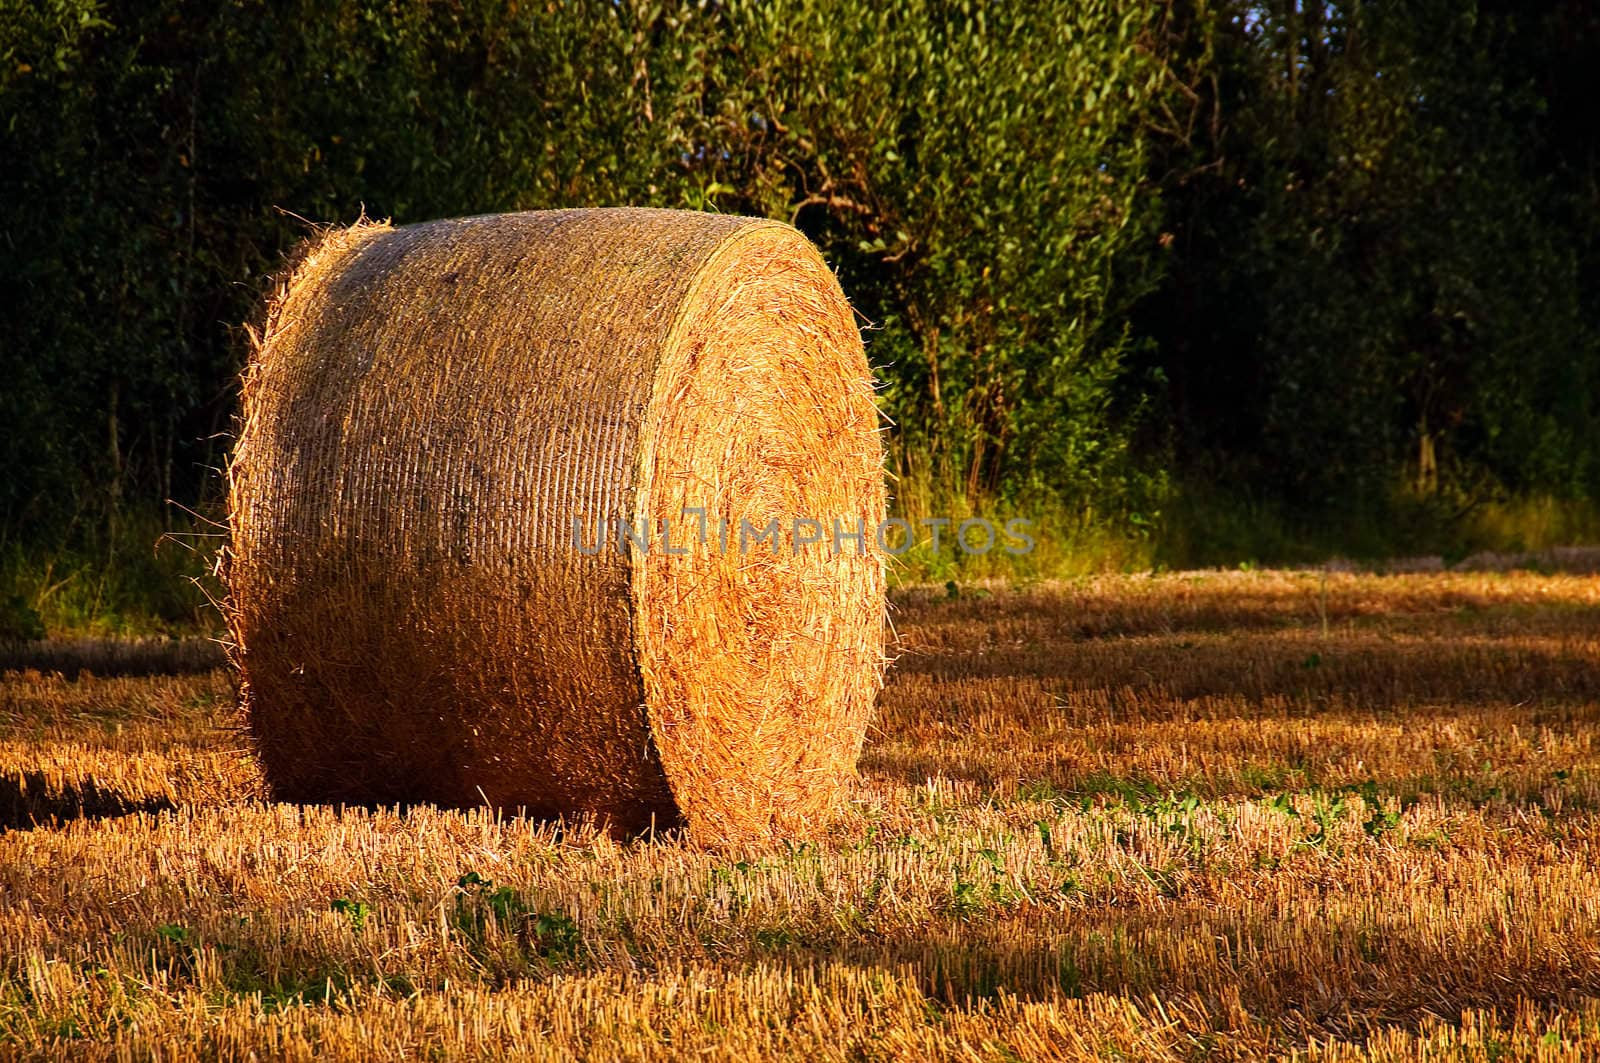 A straw bale in evening sun